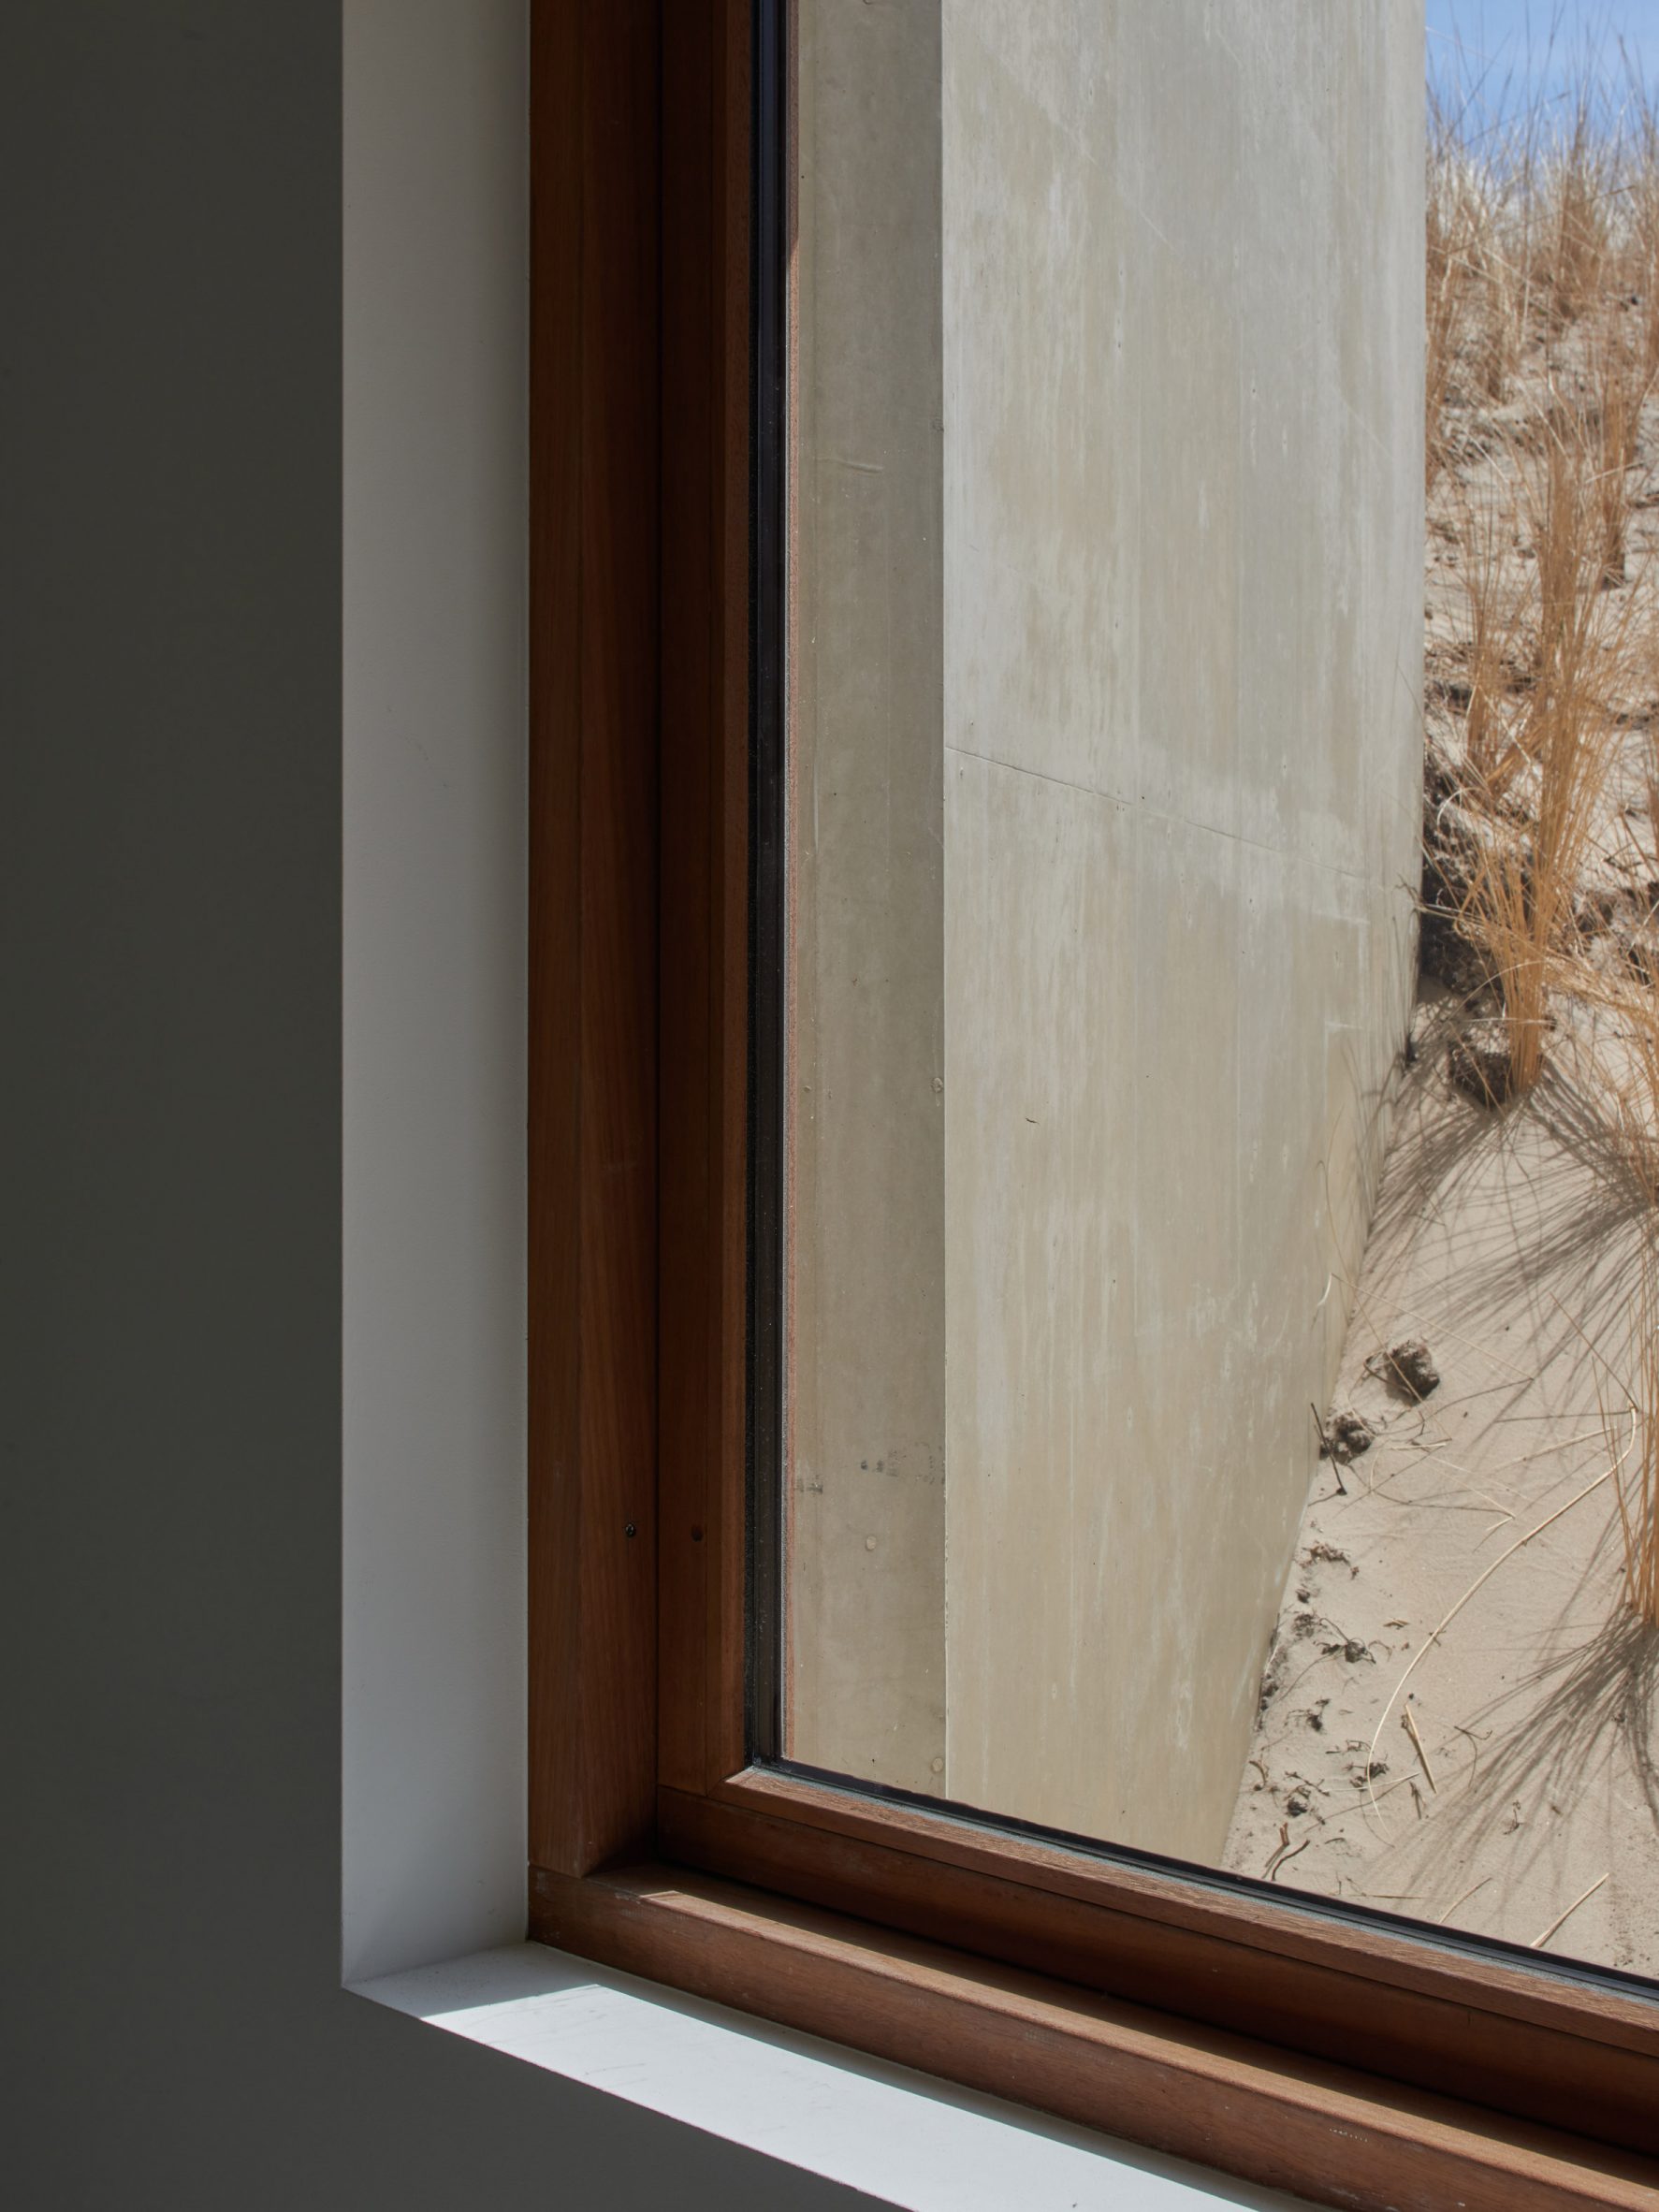 Timber-framed window